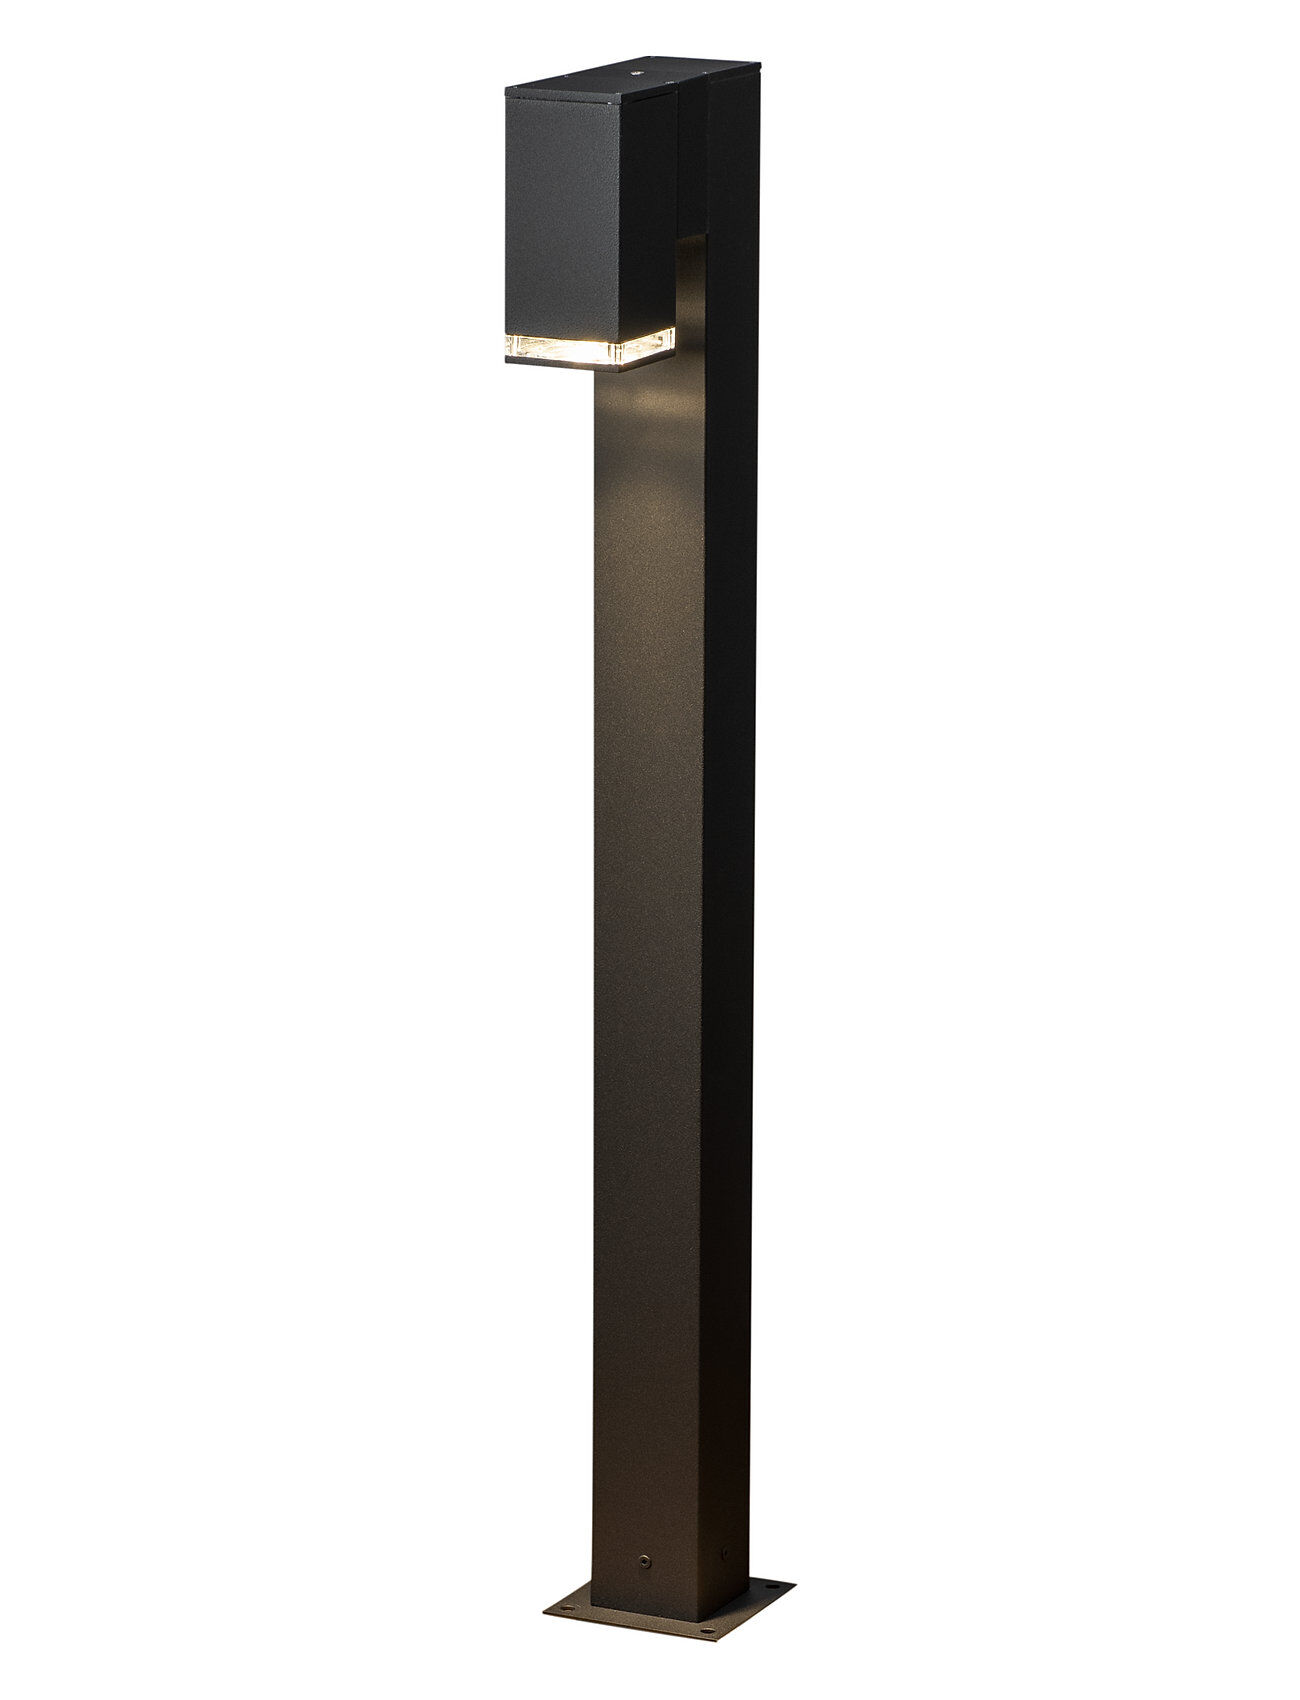 Konstsmide Antares Short Pole Gu10 Home Lighting Outdoor Lighting Garden Lights Svart Konstsmide